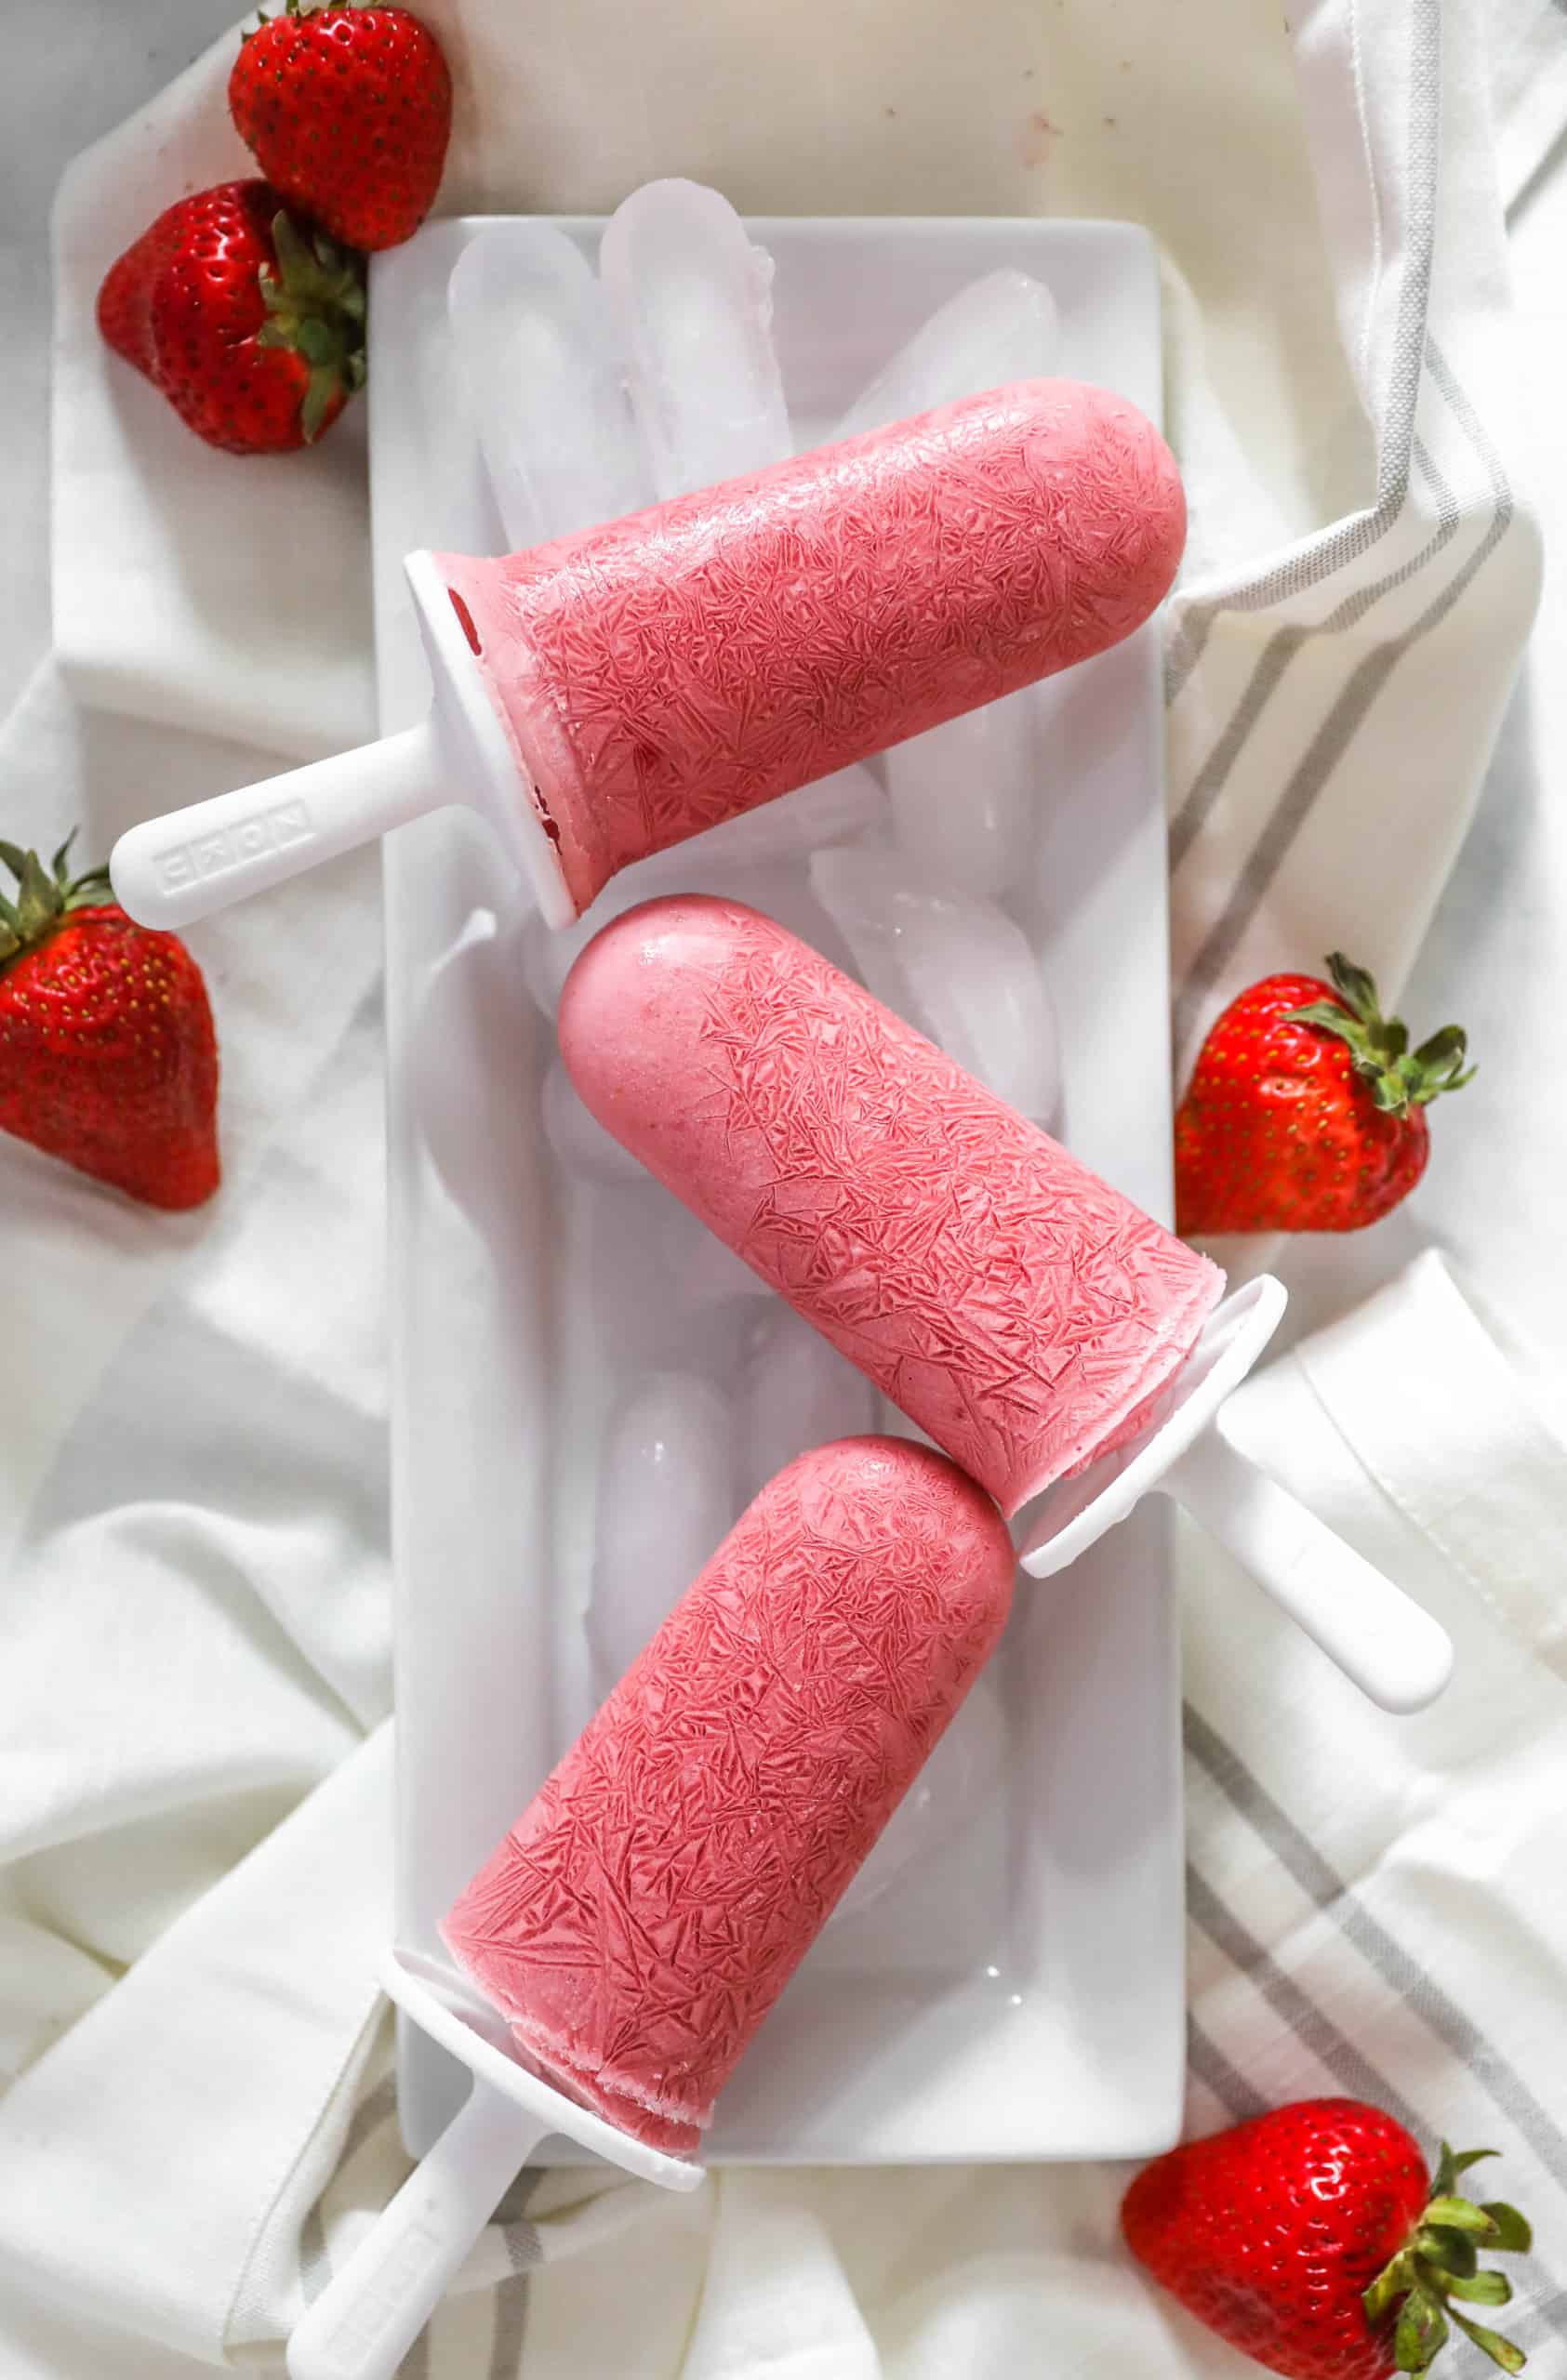 Strawberry Greek Yogurt Popsicles #popsiclerecipe #healthyrecipe